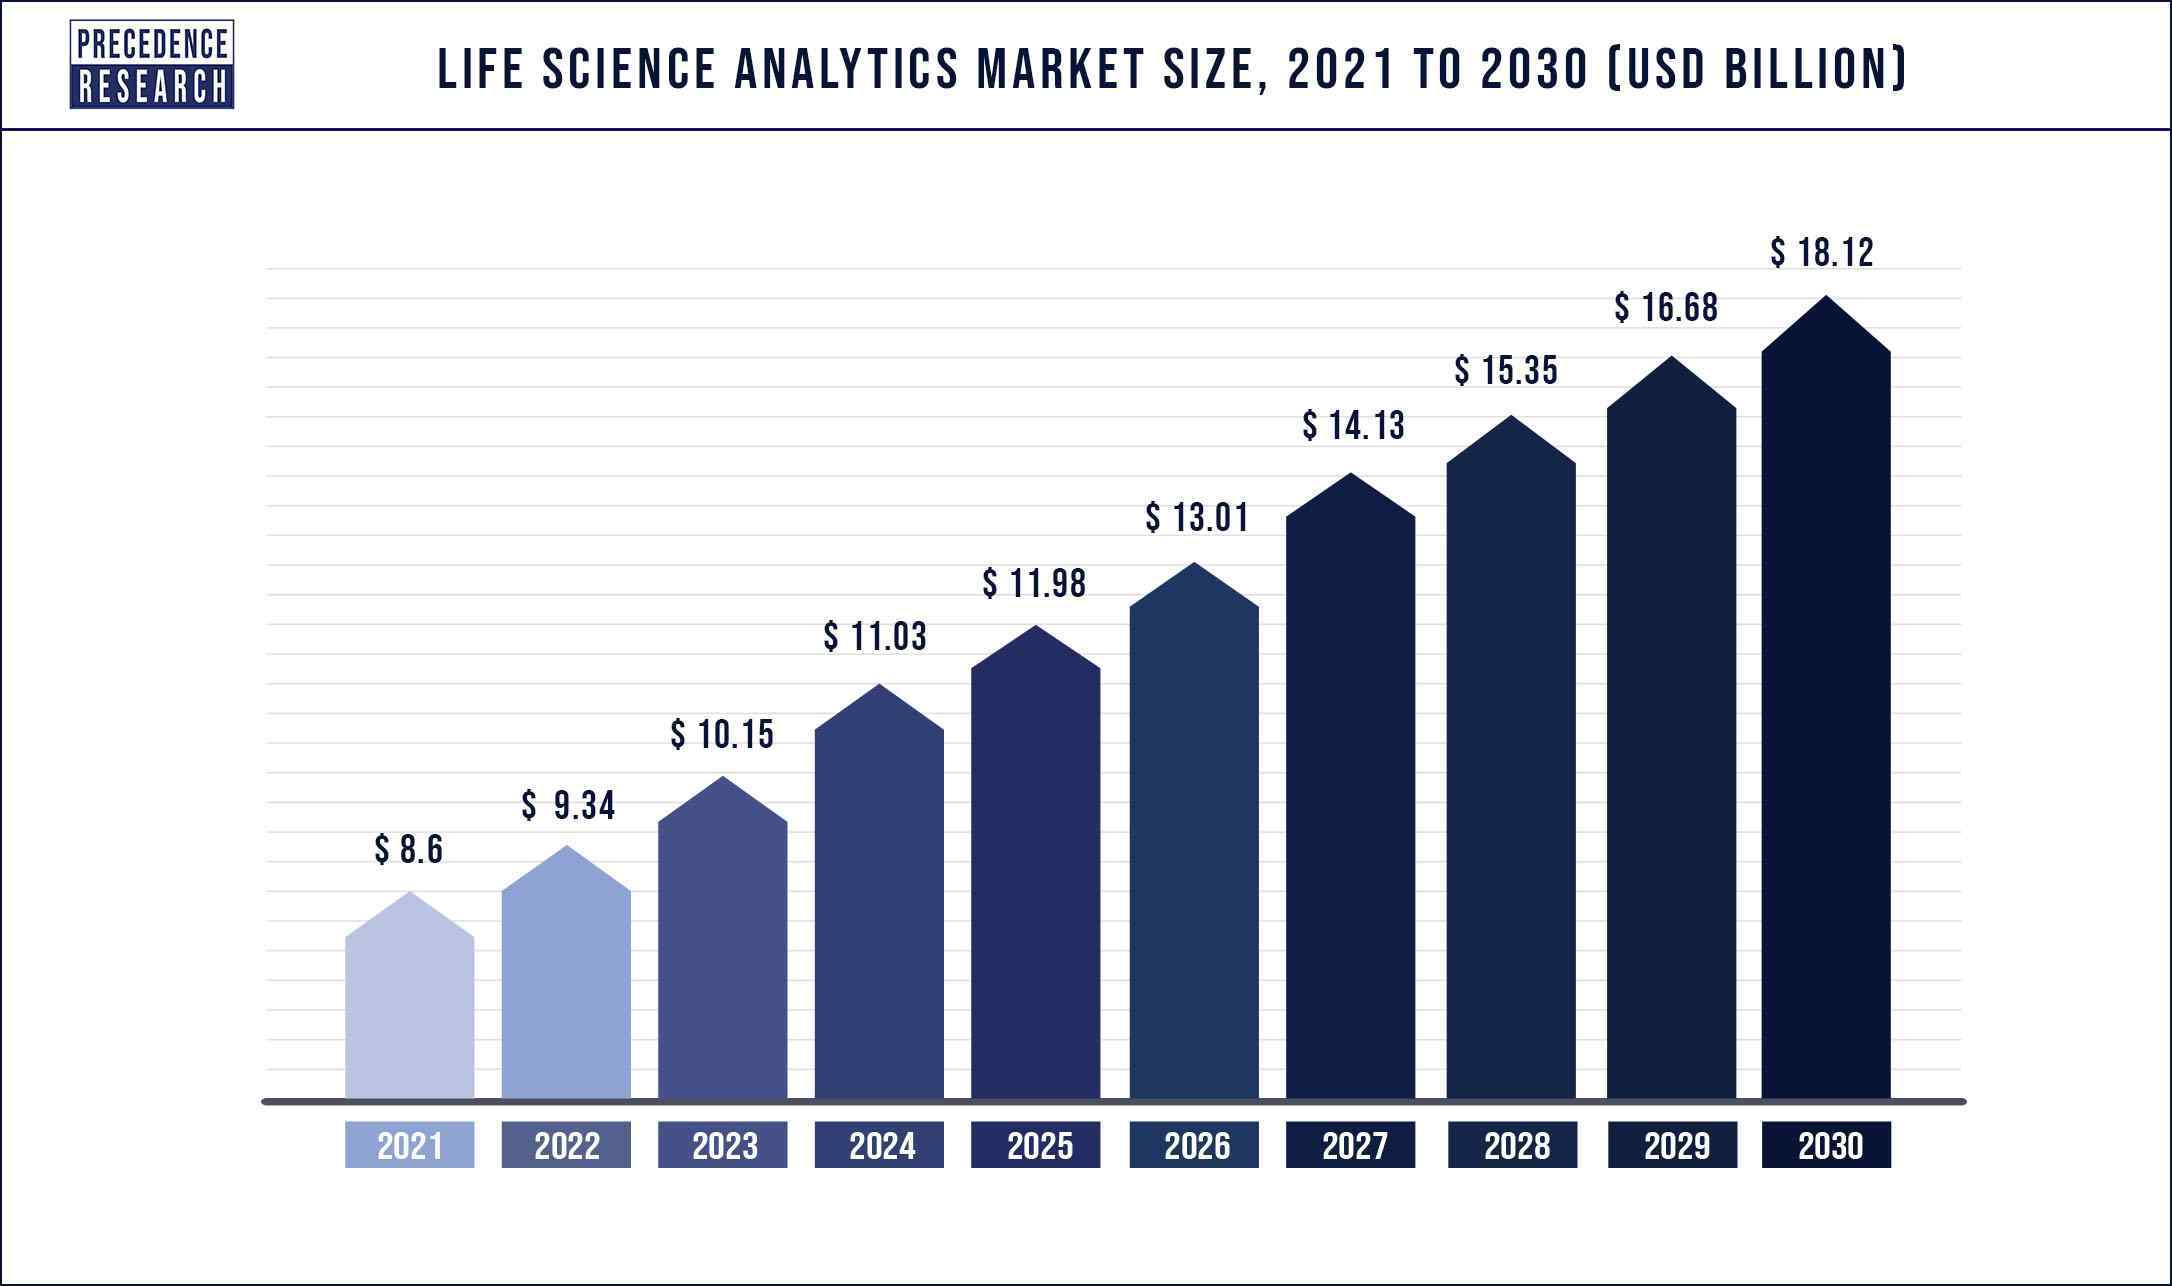 Life Science Analytics Market Size 2021 to 2030